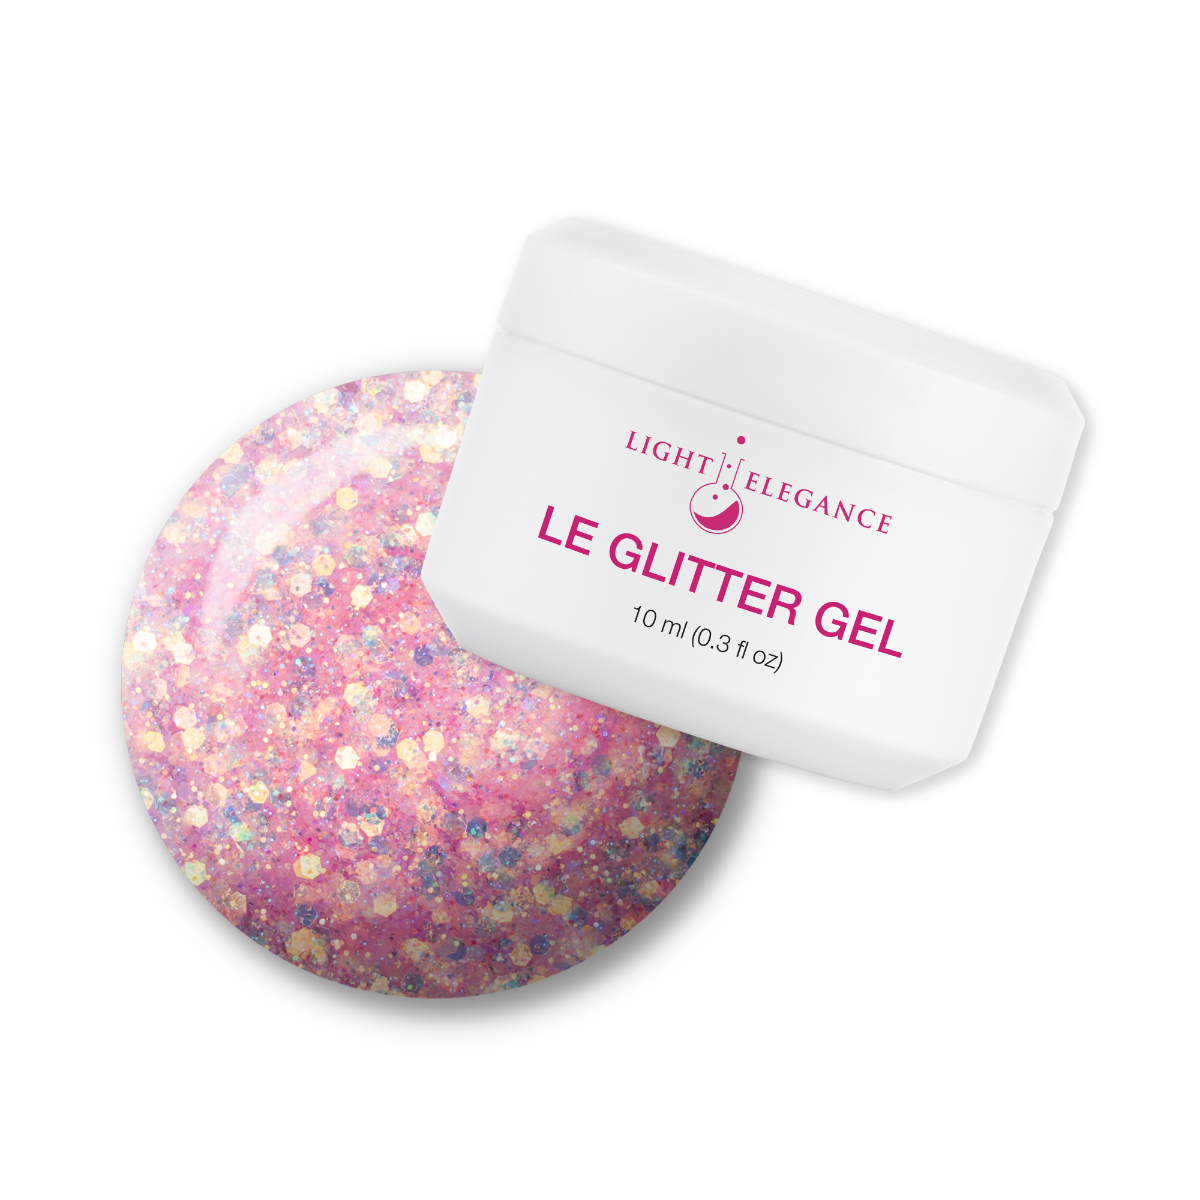 Light Elegance Glitter Gel - Grace Kelly :: New Packaging - Creata Beauty - Professional Beauty Products